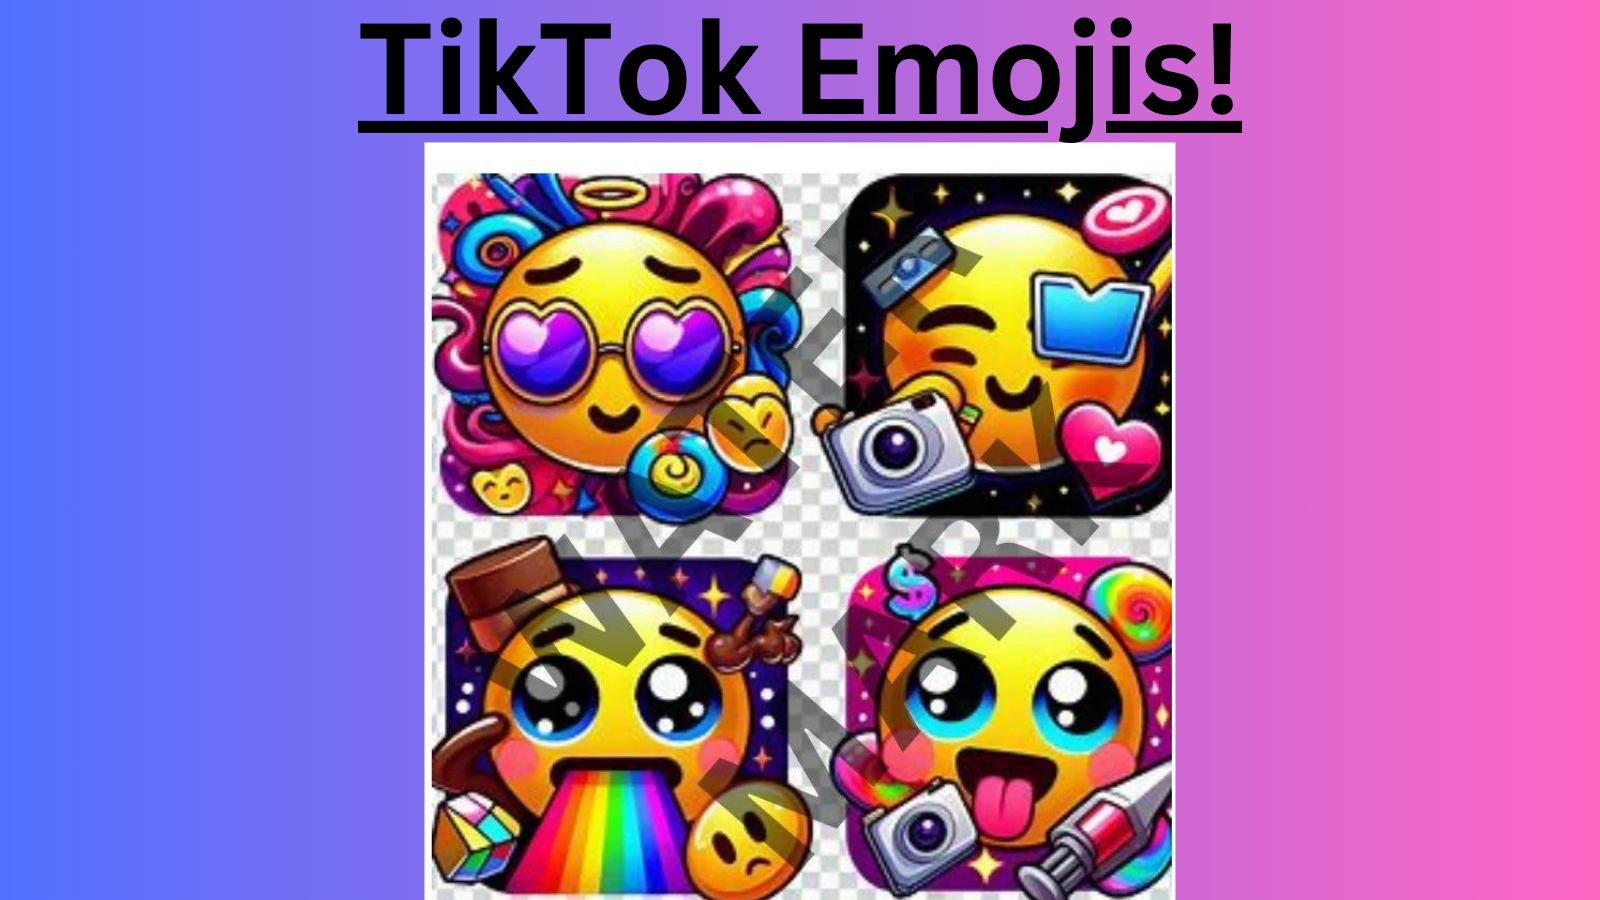 "Collection of colorful, expressive TikTok emojis with unique designs."